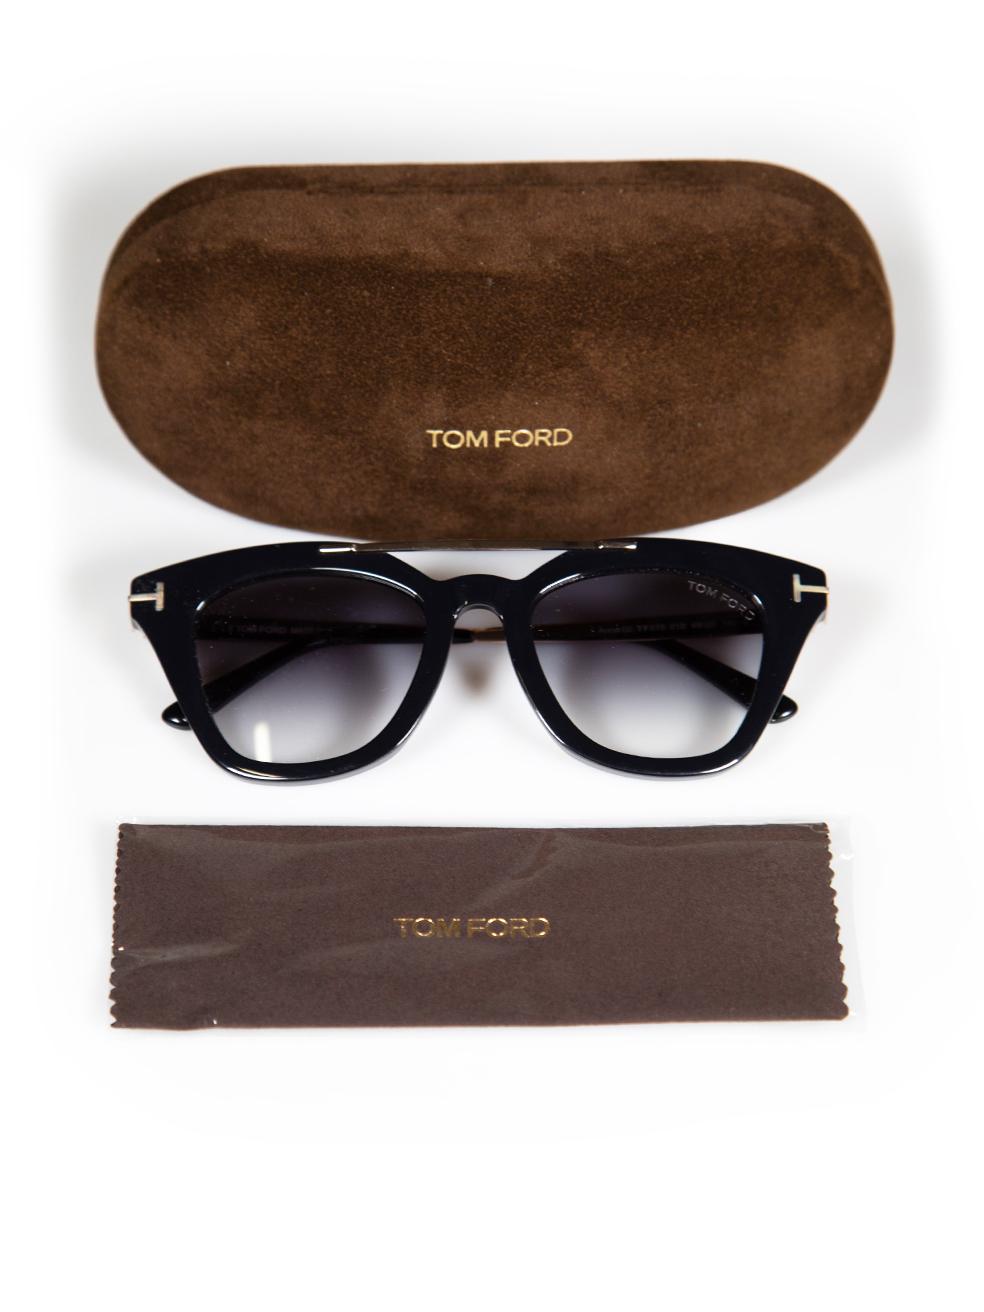 Tom Ford Shiny Black Anna Square Sunglasses For Sale 4